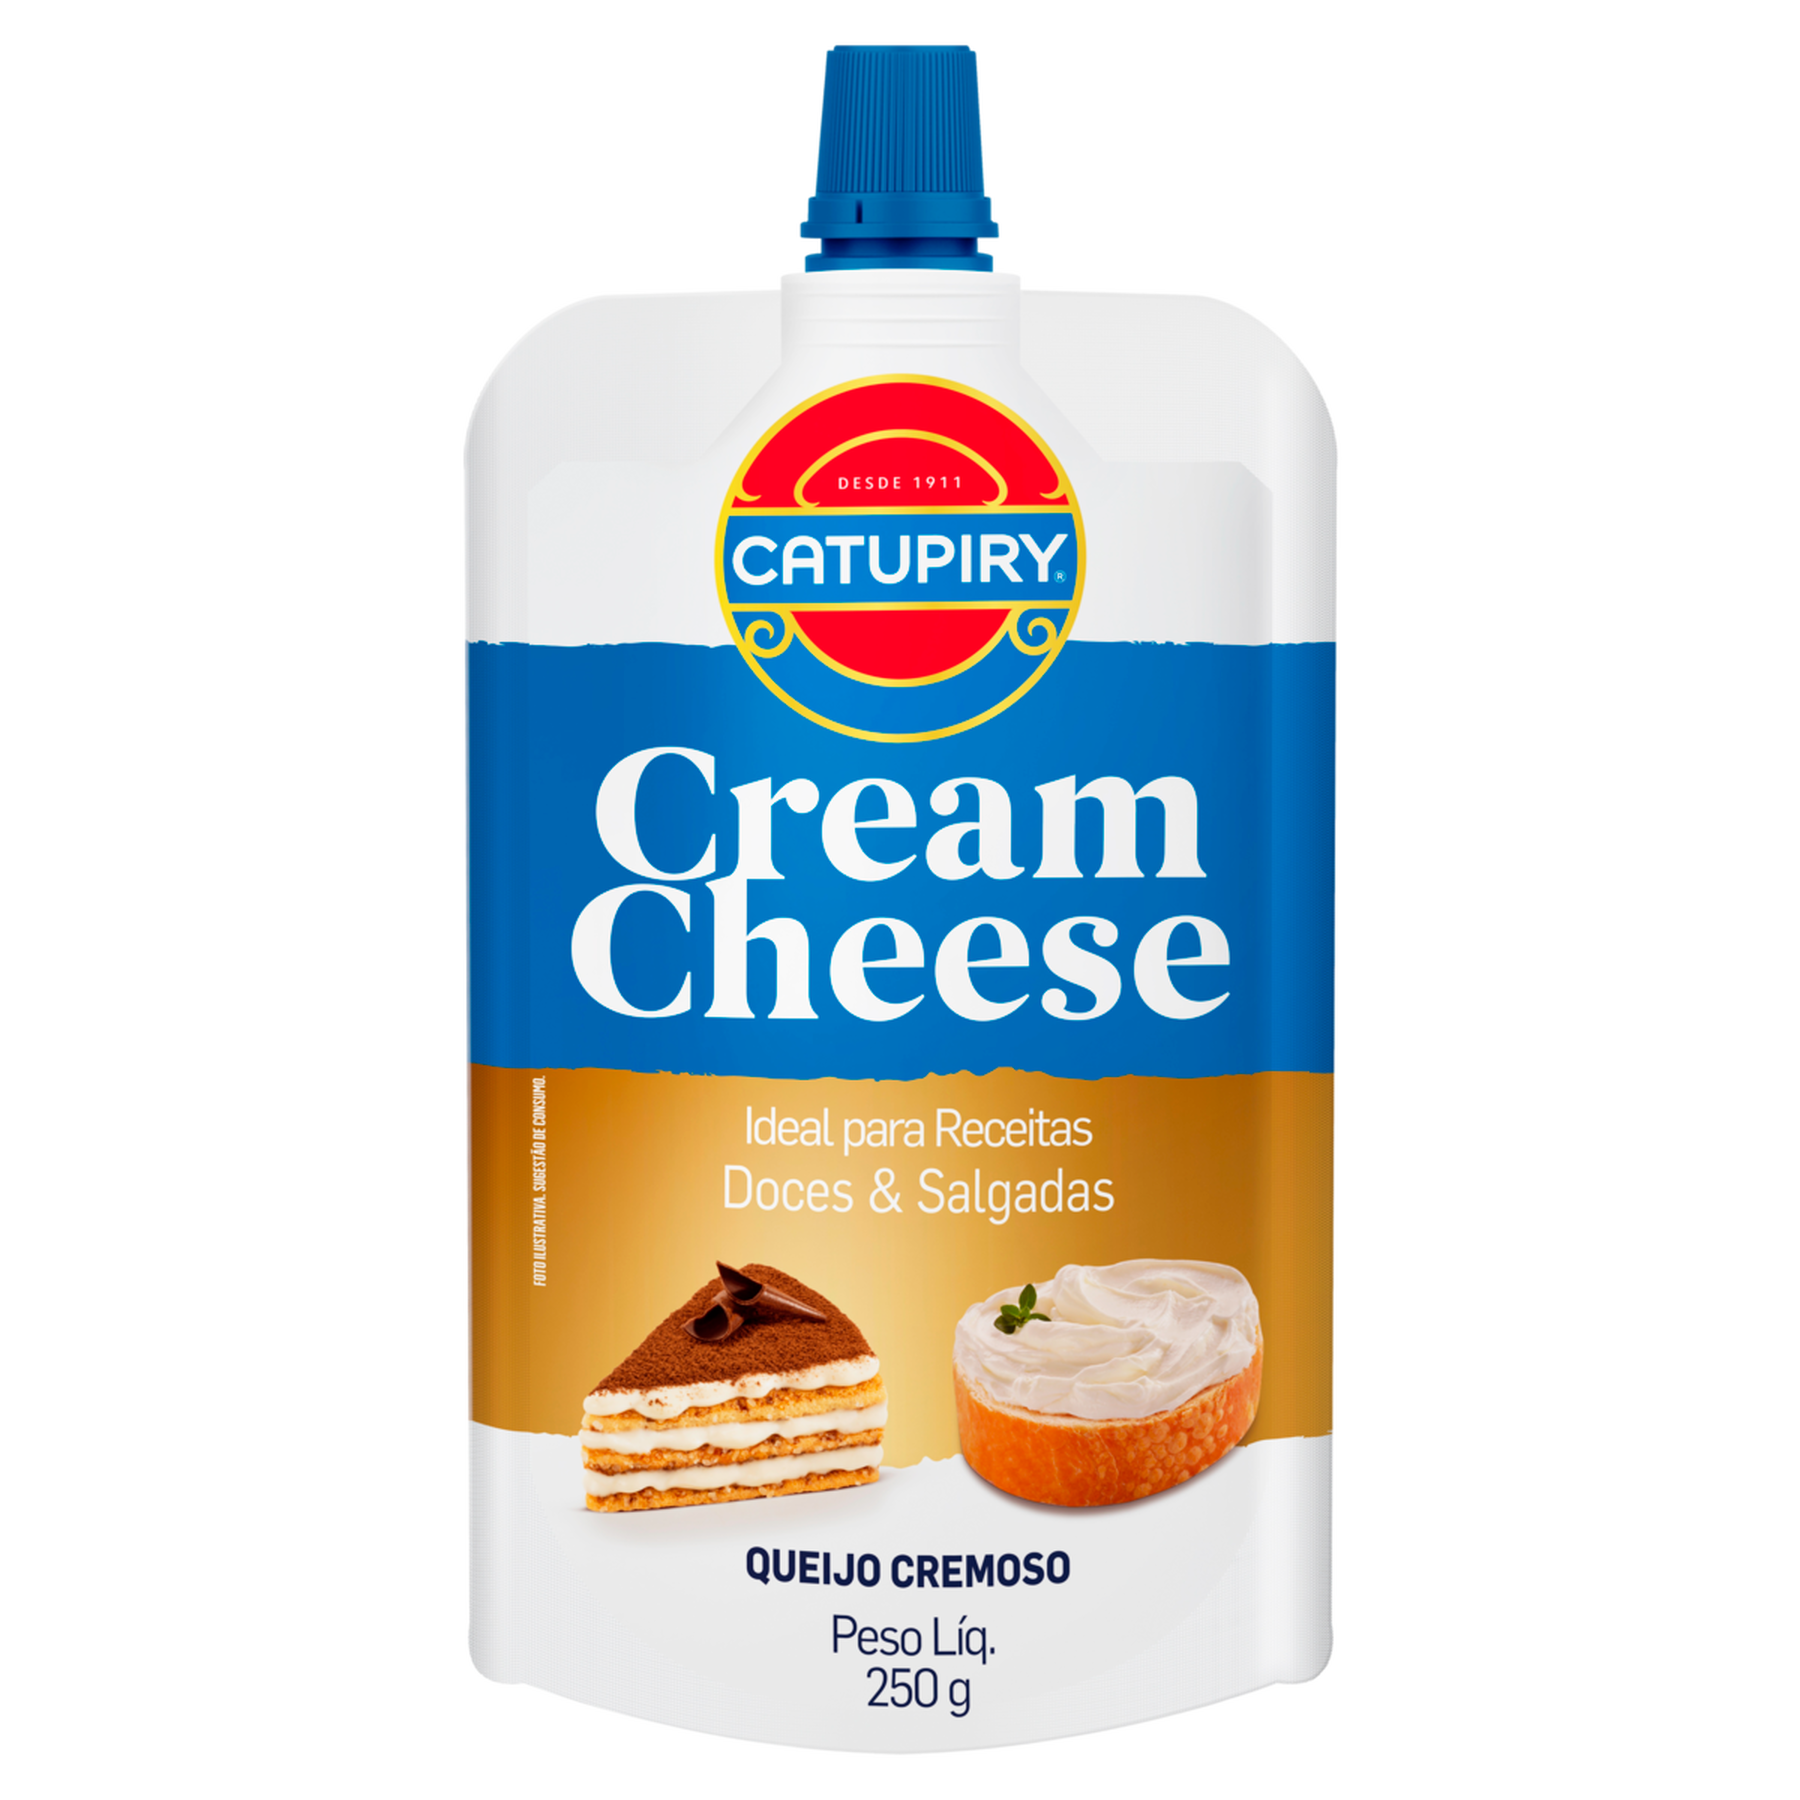 Cream Cheese Catupiry Squeeze 250g